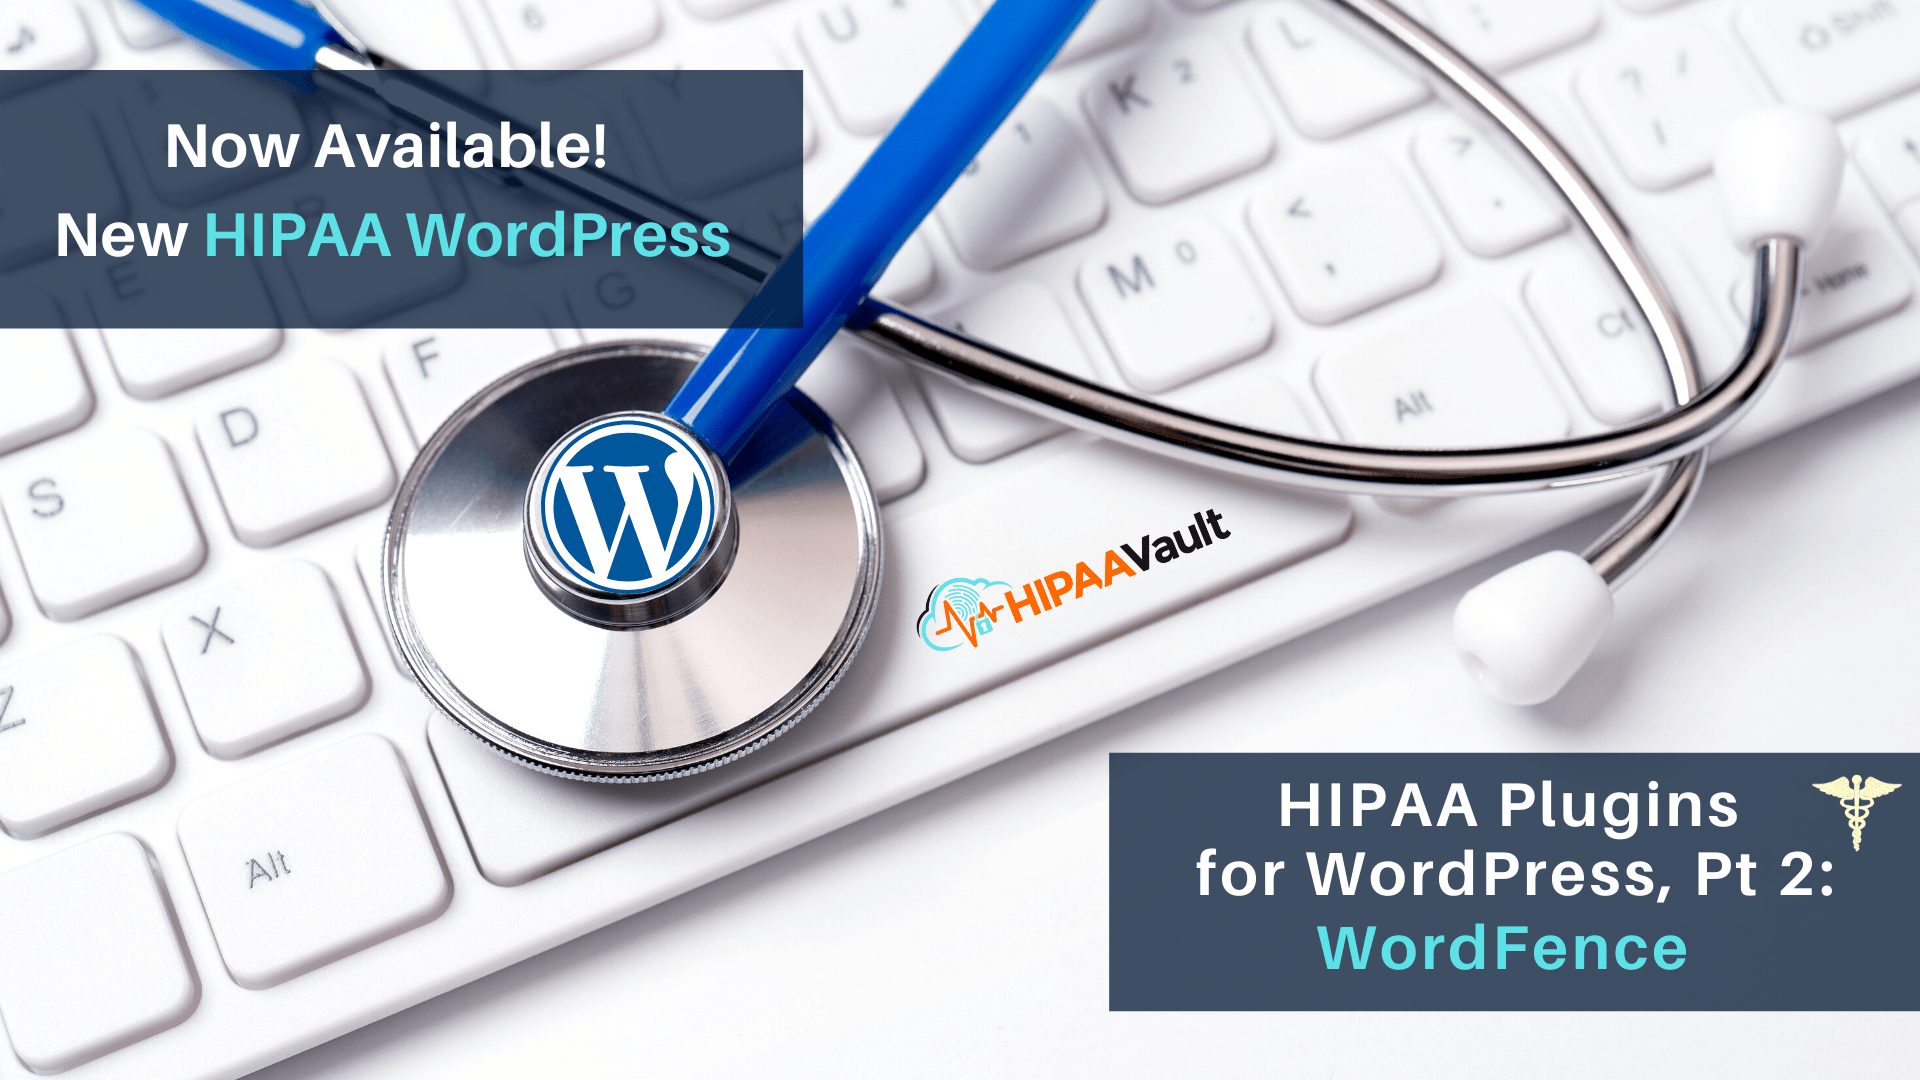 HIPAA Plugins for WordPress- Part 2 – WordFence